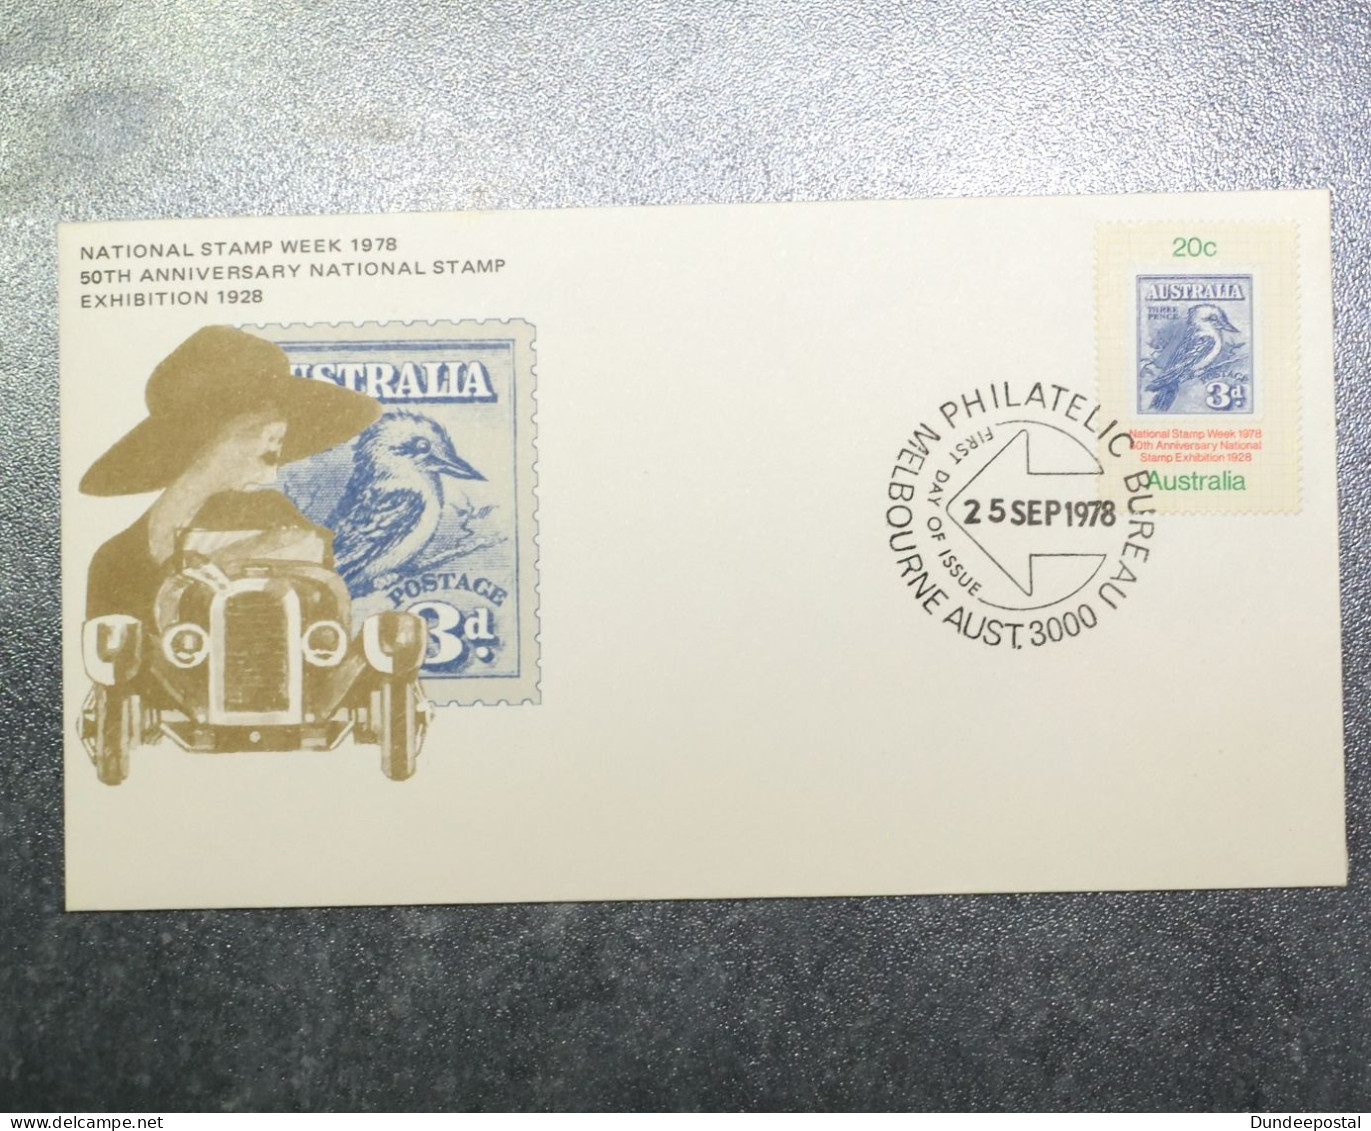 AUSTRALIA  First Day Cover  Stamp Week Single 1978  ~~L@@K~~ - Briefe U. Dokumente